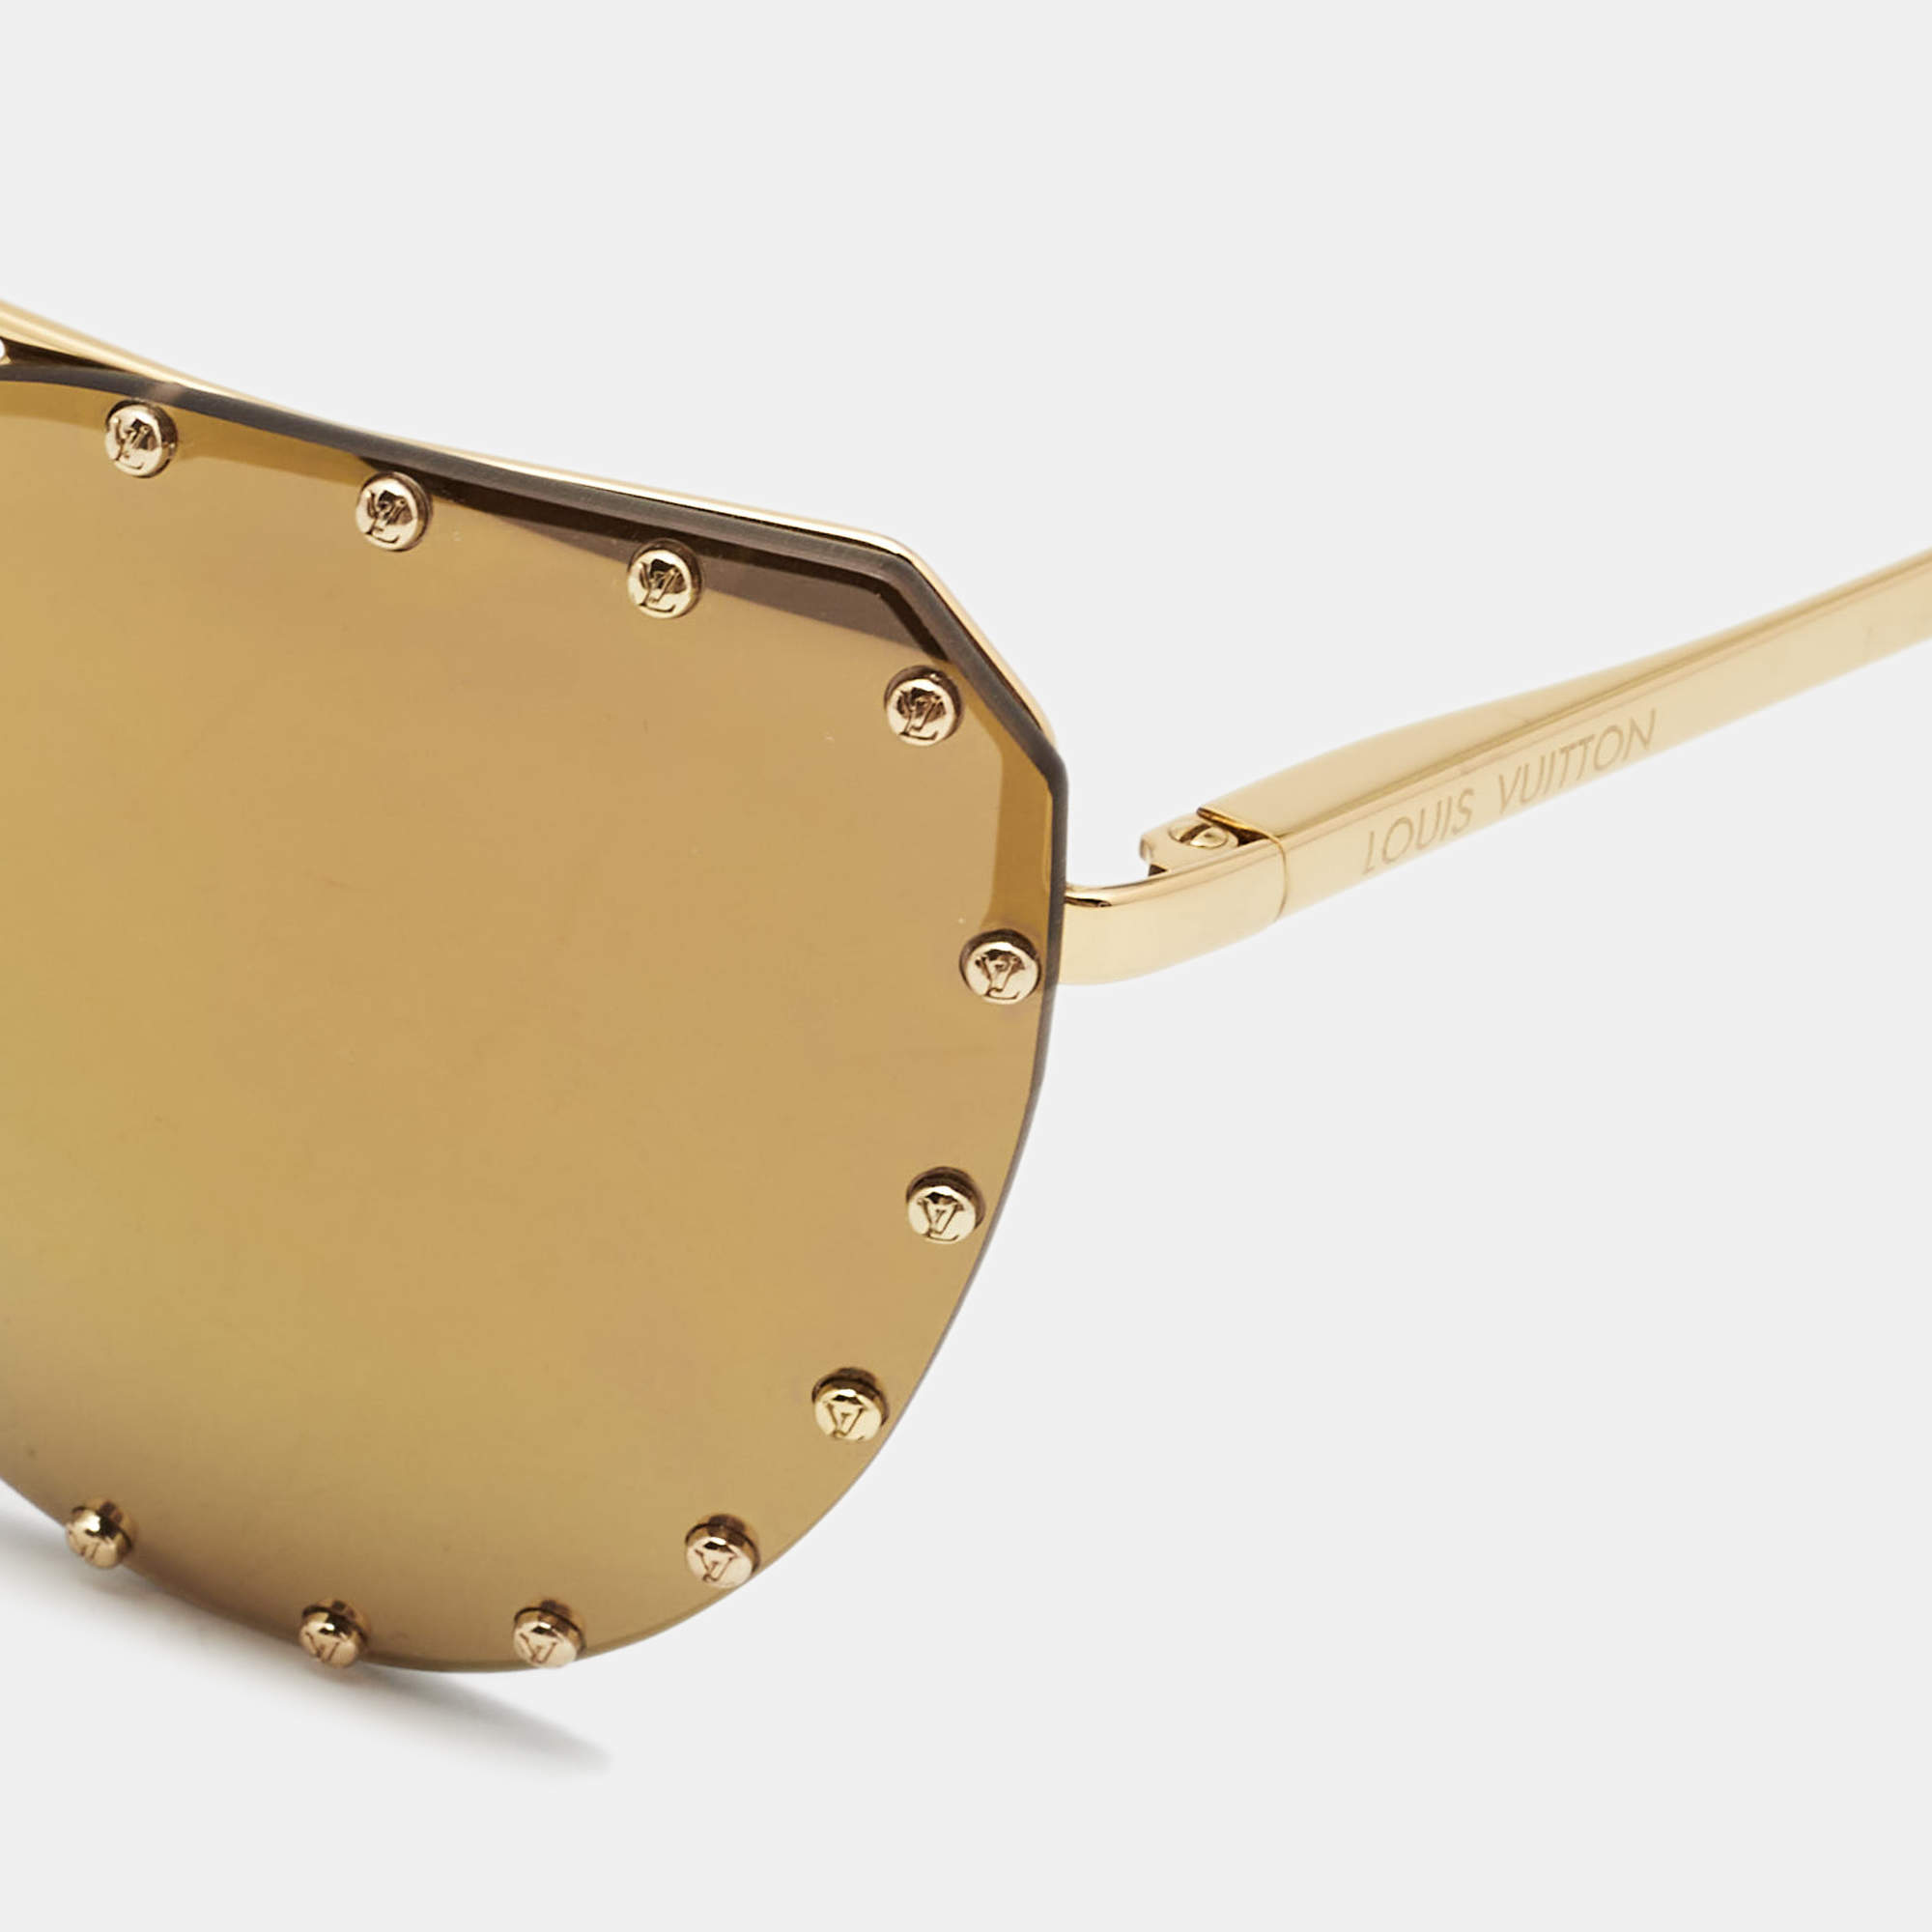 Louis Vuitton Goldtone Metal Frame The Party Sunglasses Z01064U